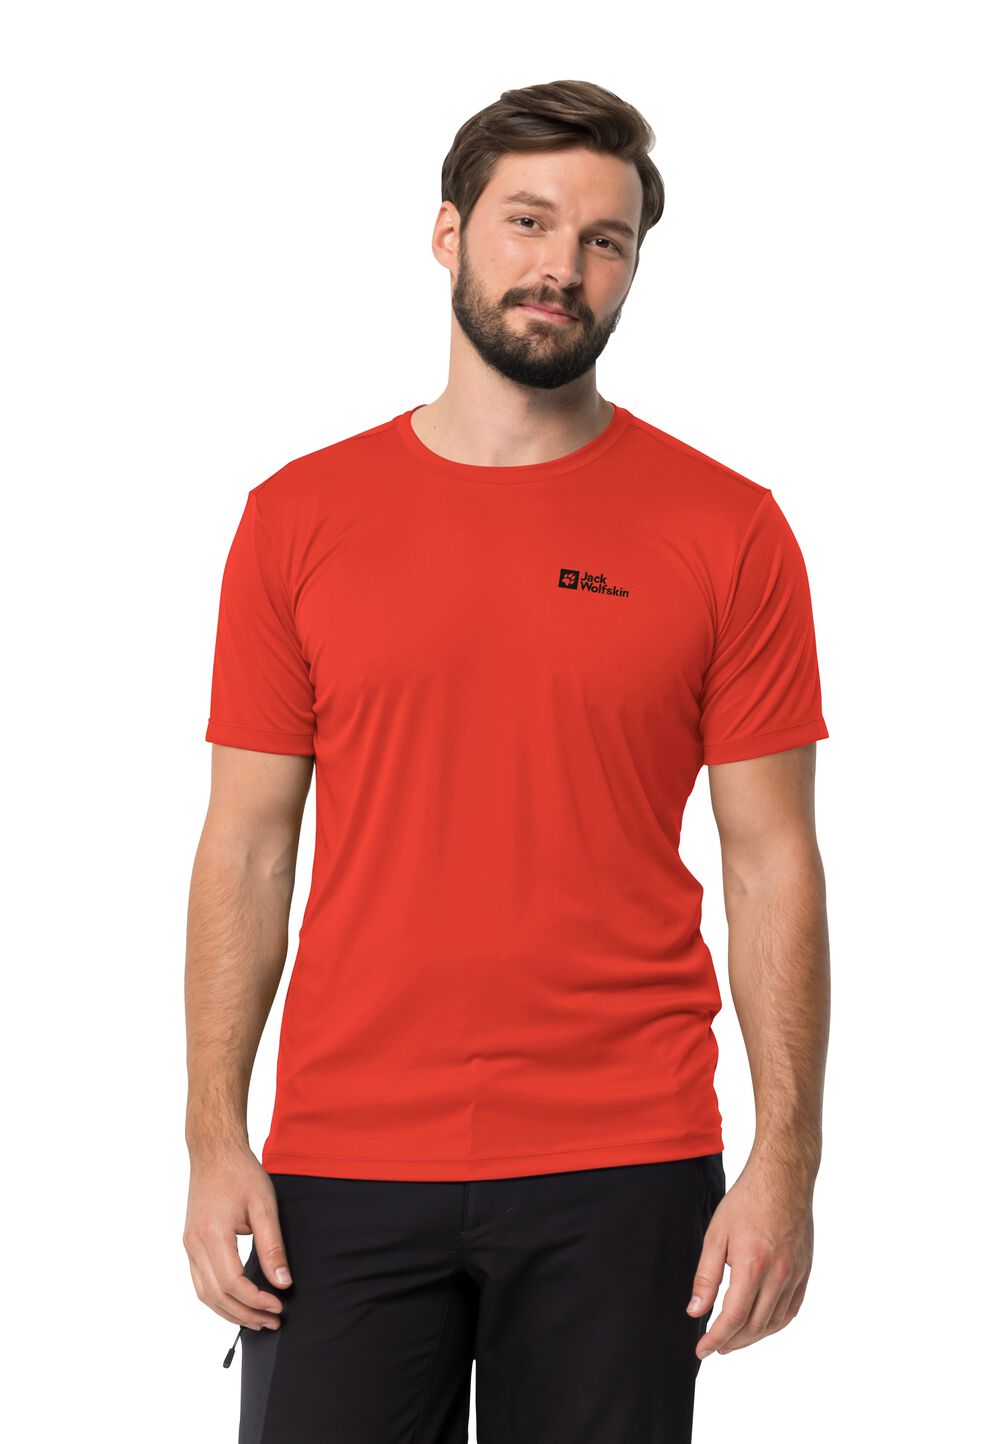 Jack Wolfskin Funktionsshirt Herren Tech T-Shirt Men S rot strong red von Jack Wolfskin